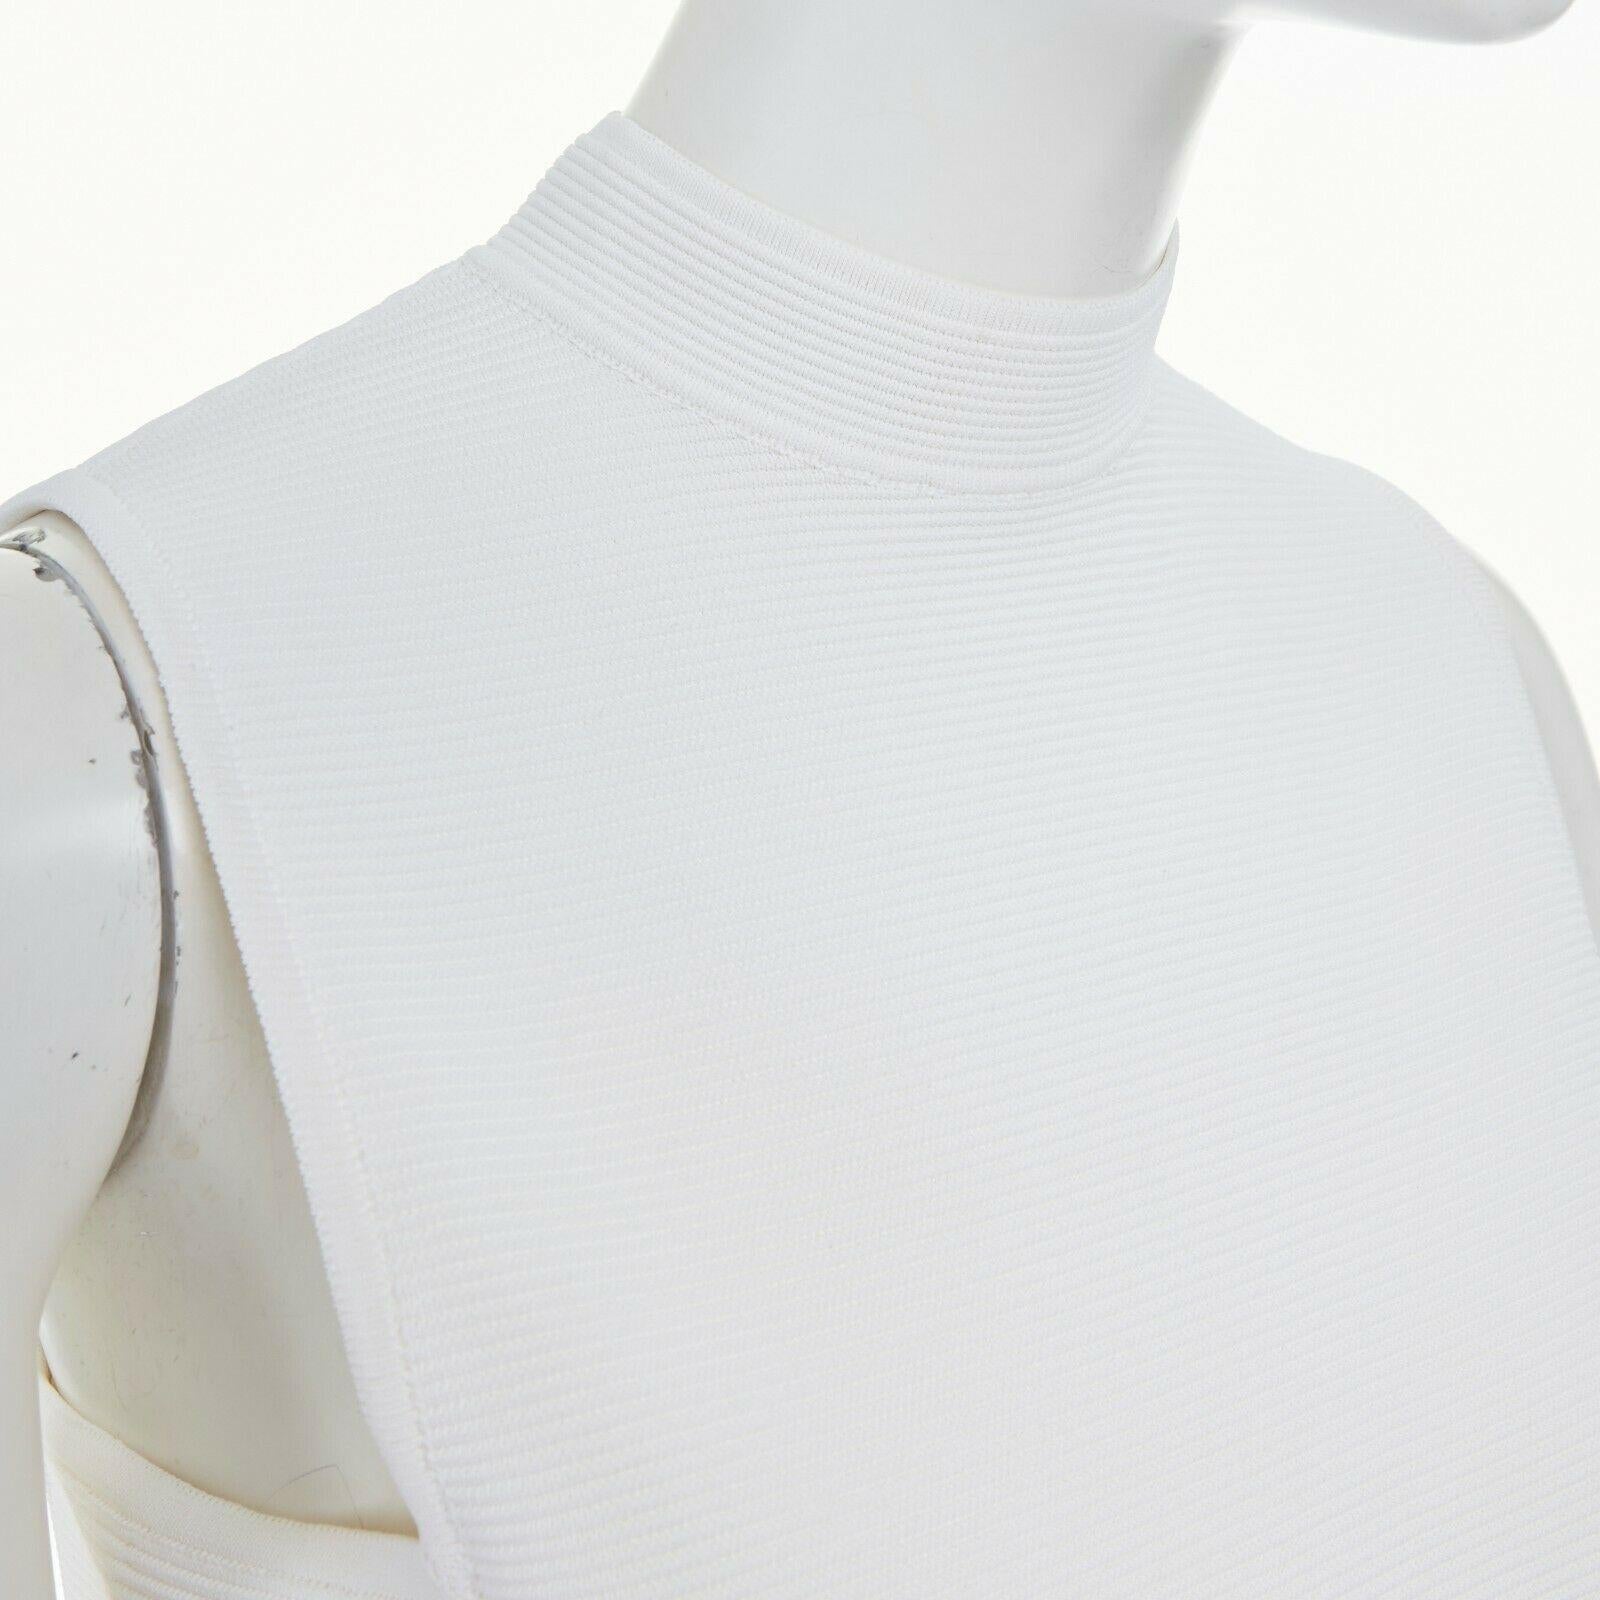 RALPH LAUREN PURPLE COLLECTION white textured knit mock collar vest top S 3